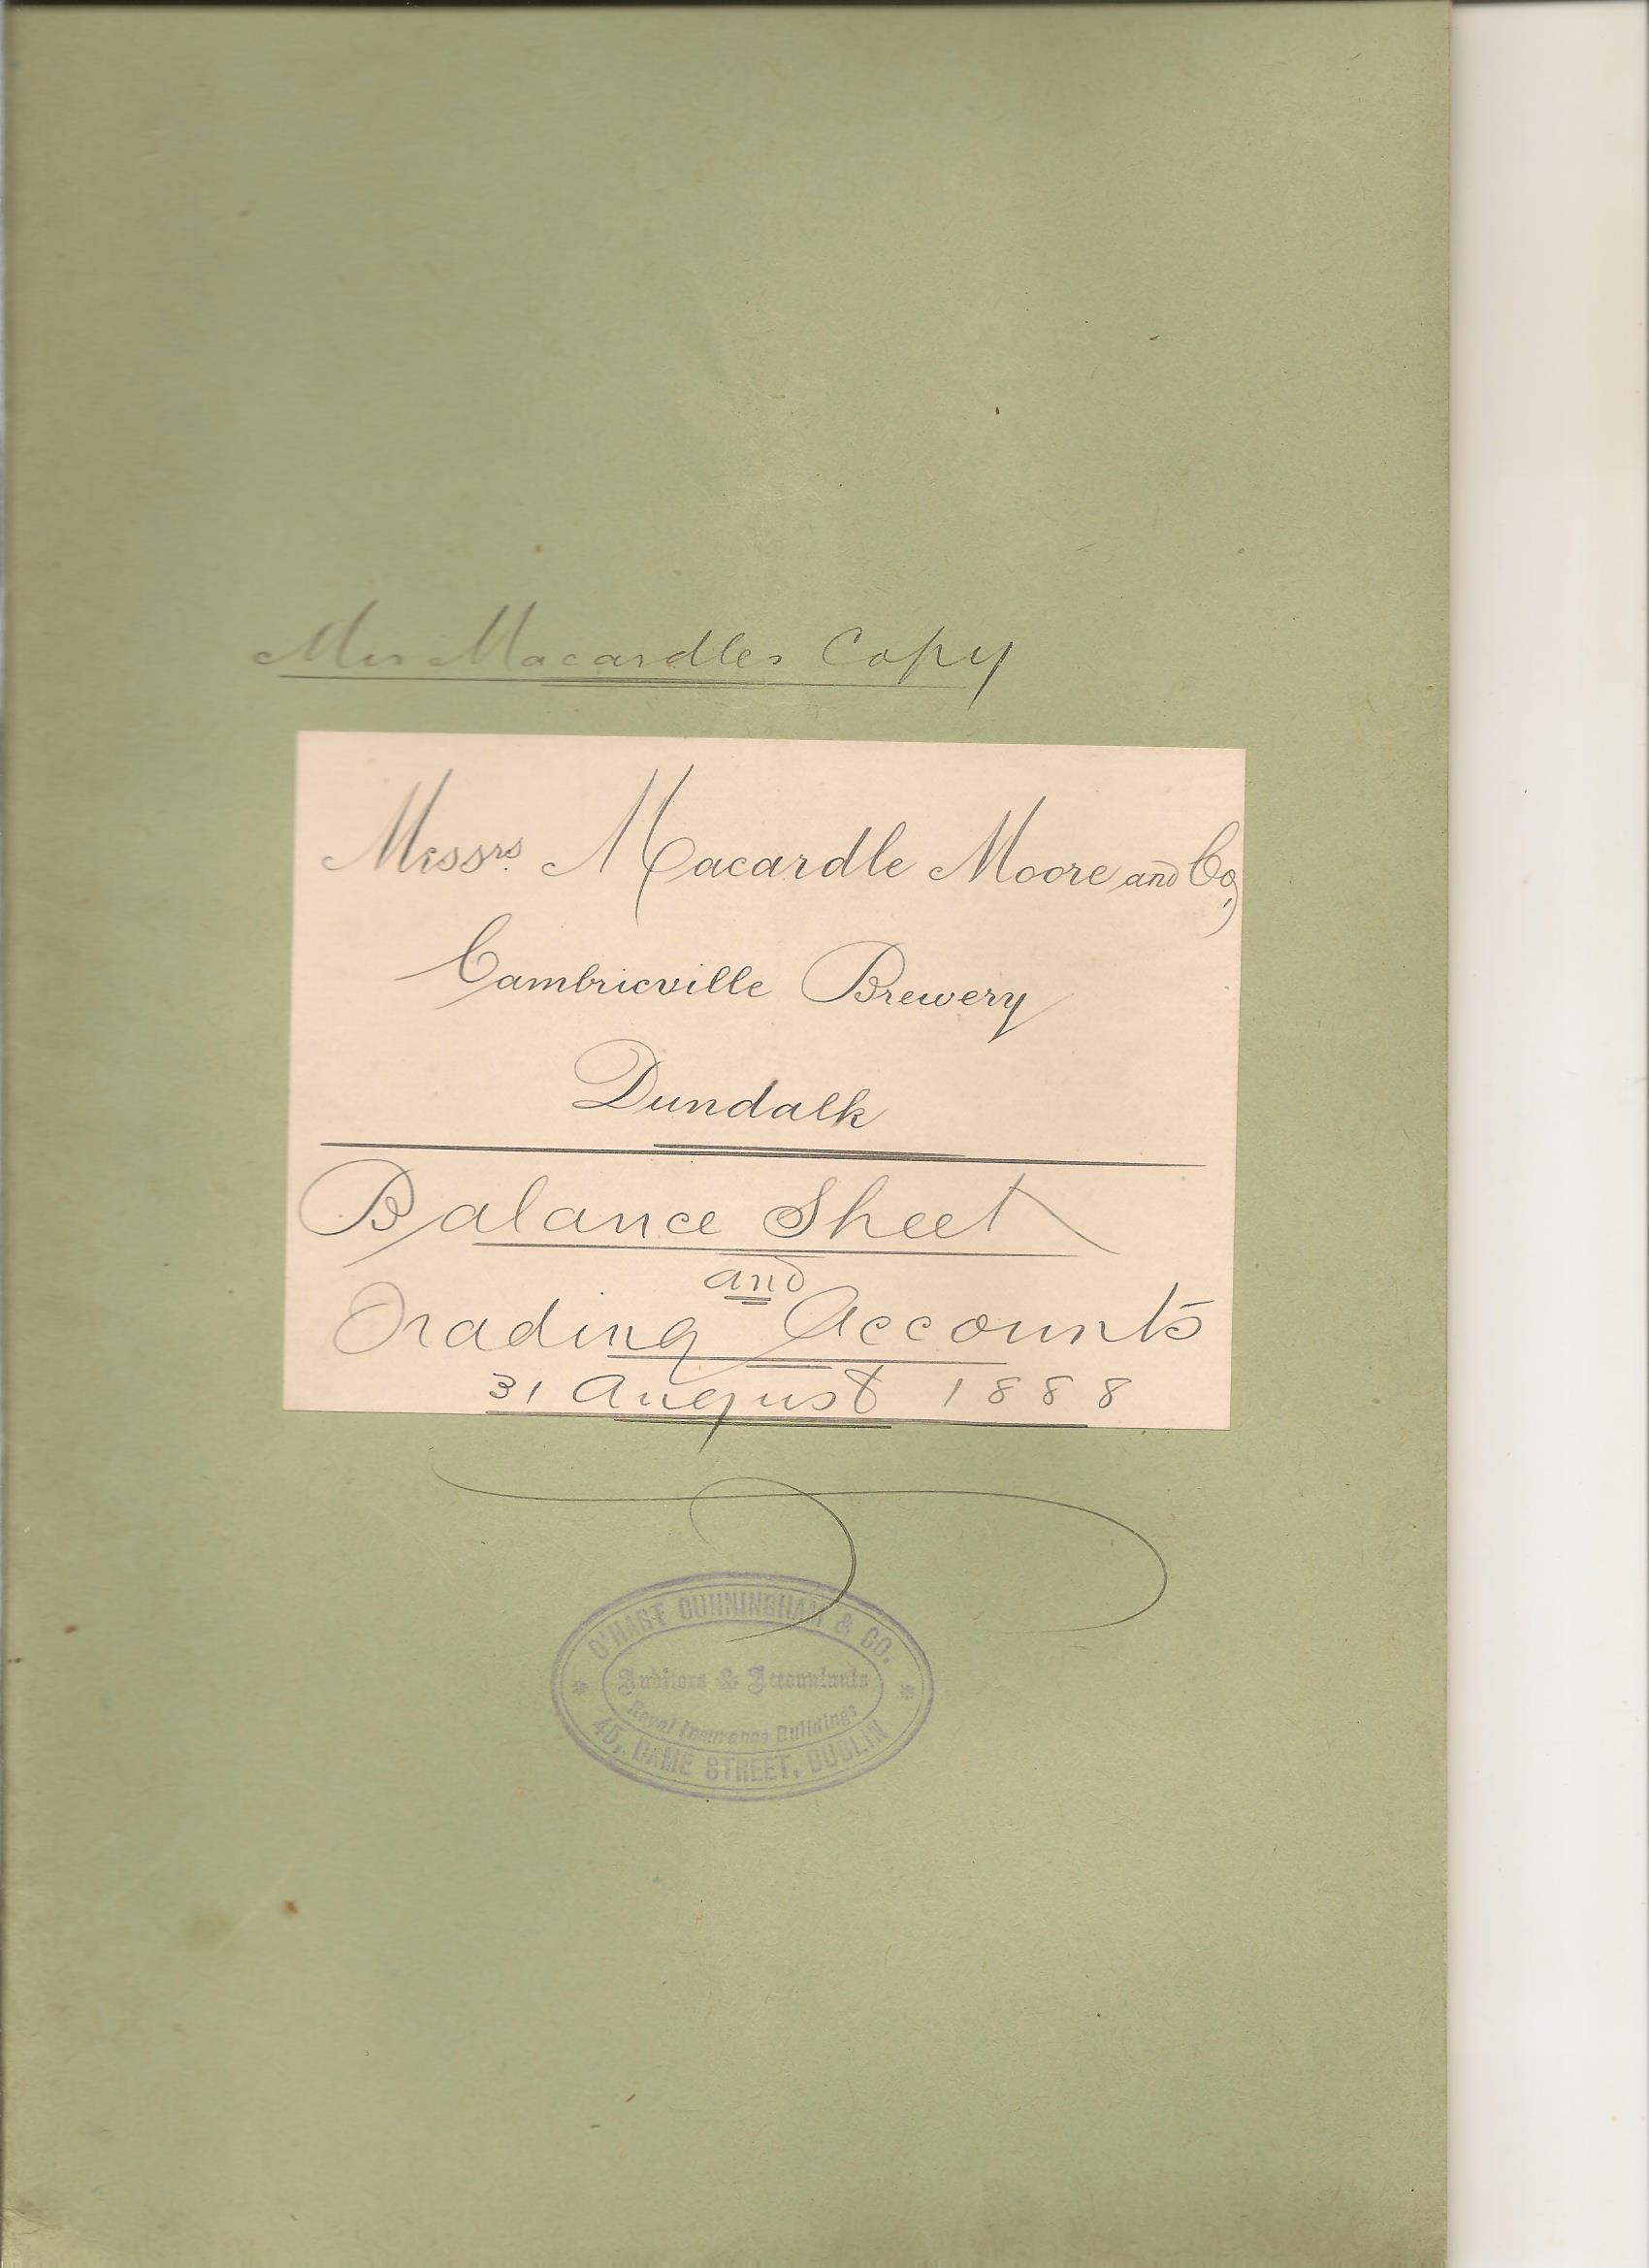 Macardle Moore - Accounts - Aug - 1888